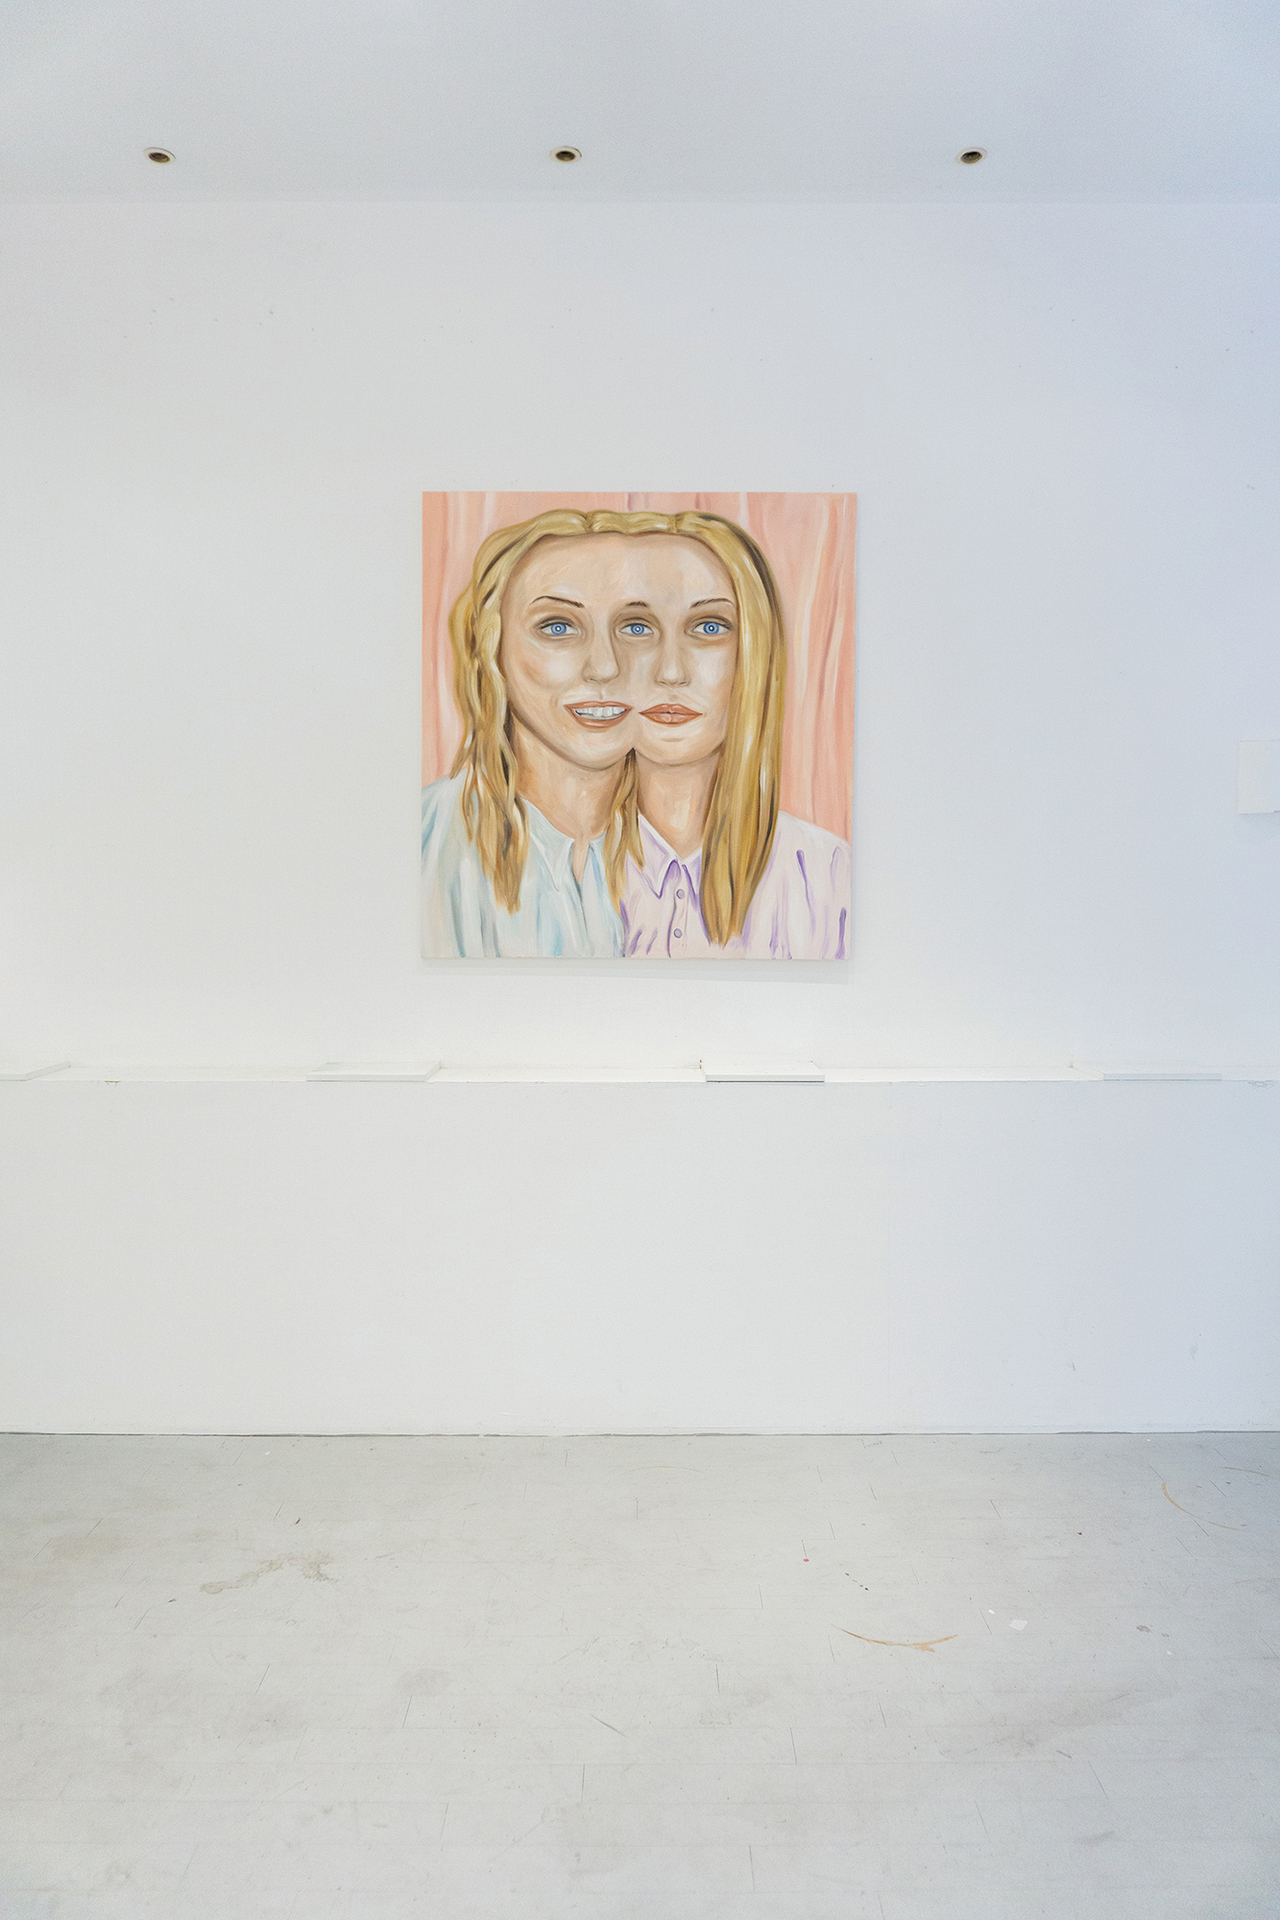 Leonie Specht, Digital twins, 2021, oil on canvas, 130 x 140 cm